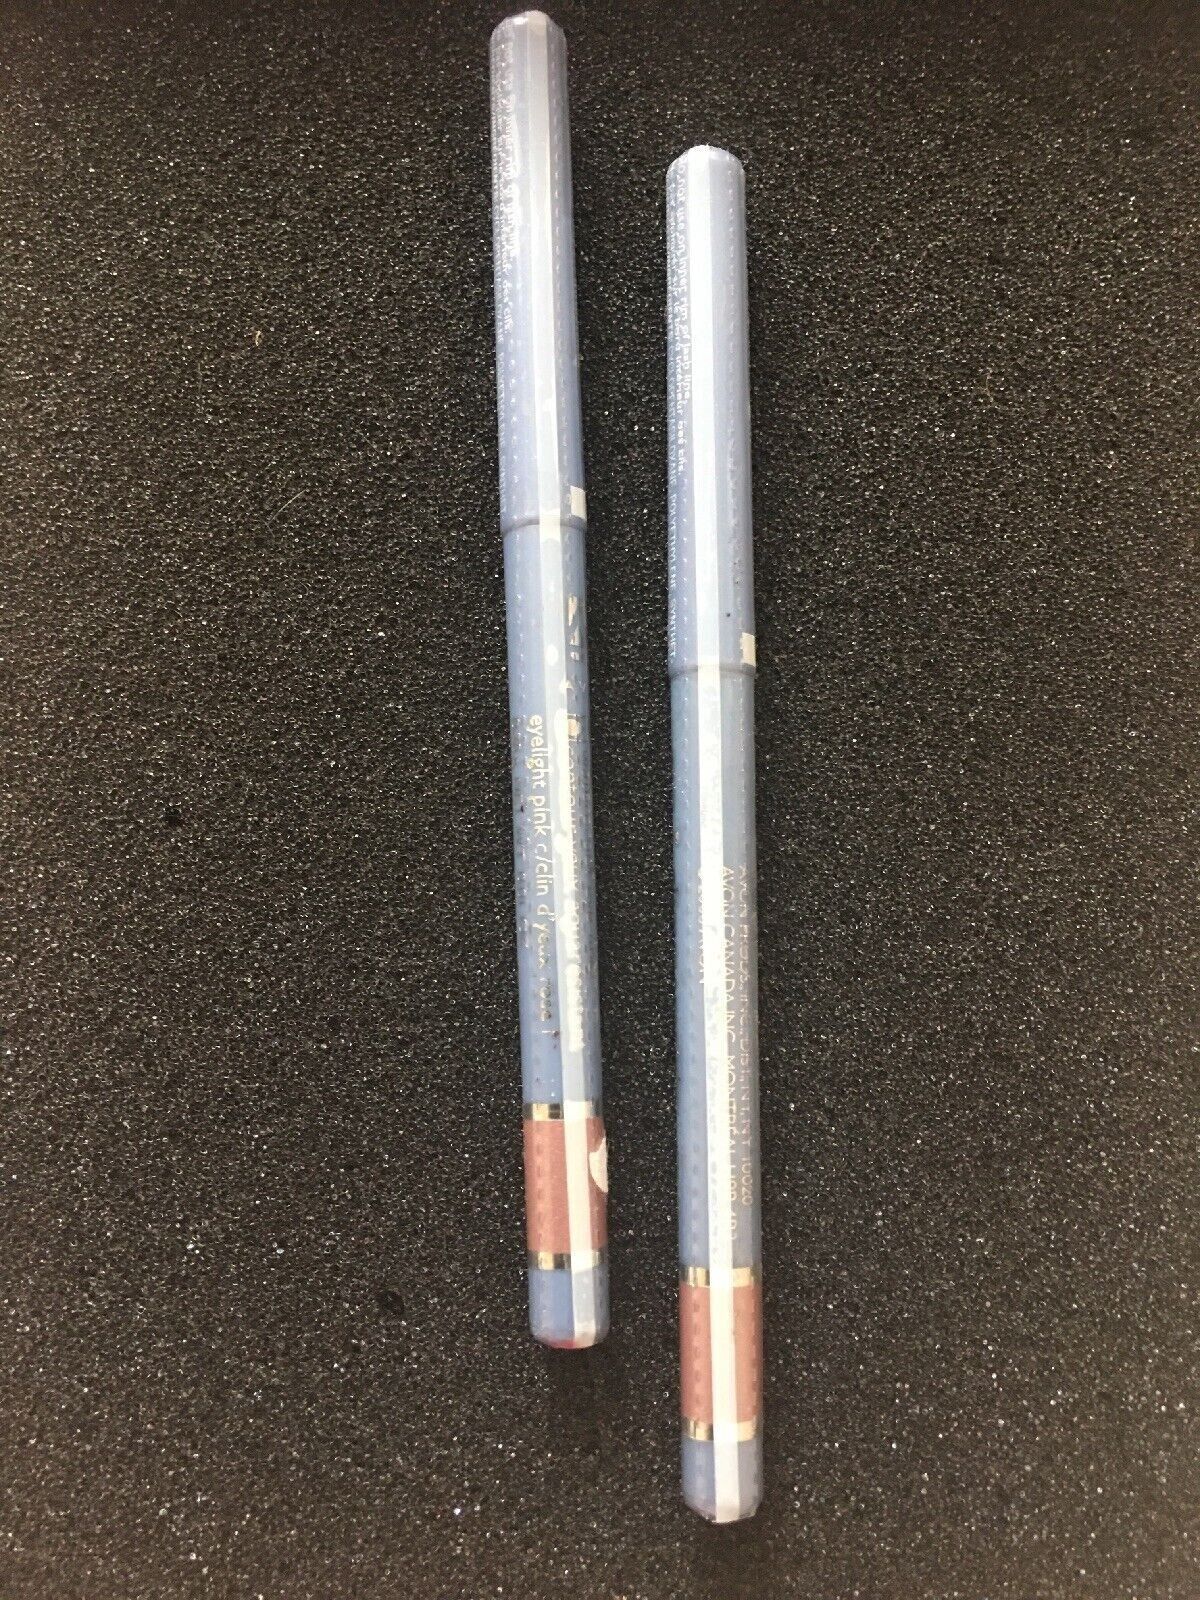 Set 4 AVON Waterproof Glimmersticks Eyeliner Pencil EYELIGHT PINK Full Size New - $7.60